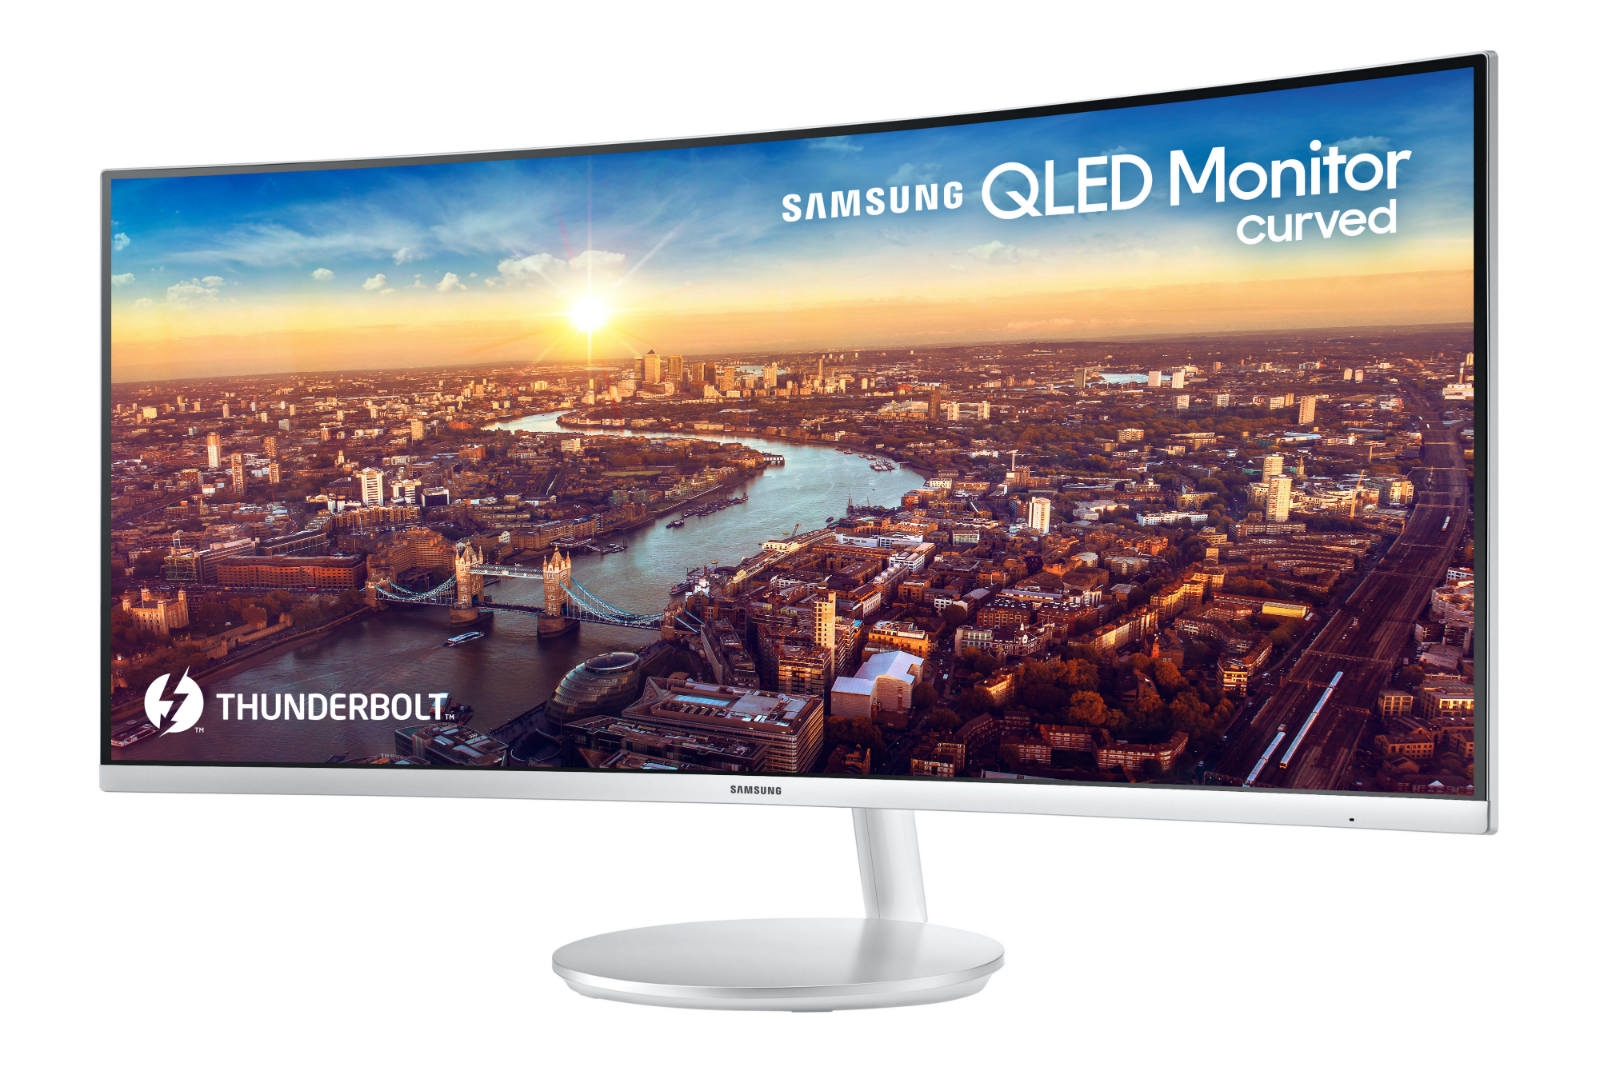 Samsung's latest curved QLED monitor packs Thunderbolt 3 | DeviceDaily.com